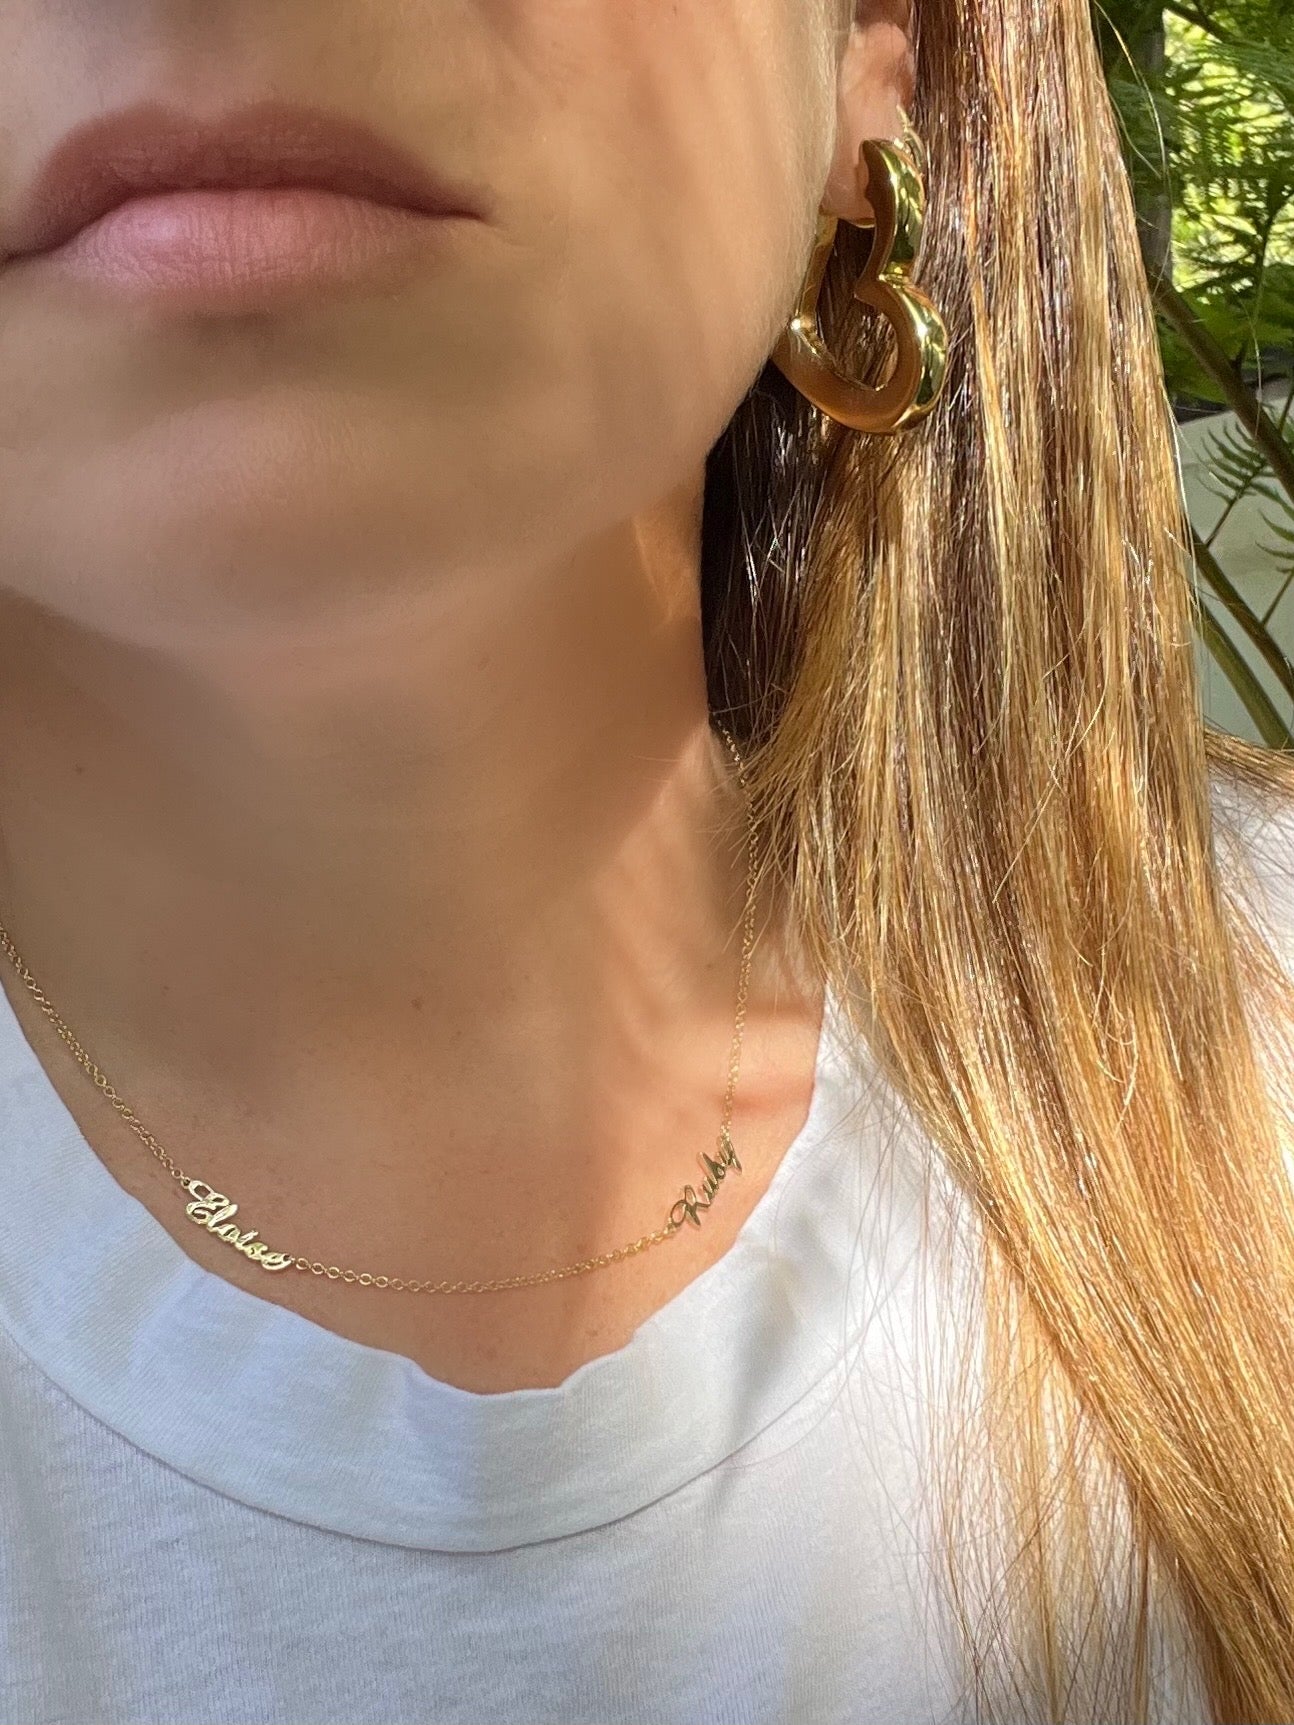 Mini LOVE Nameplate Necklace